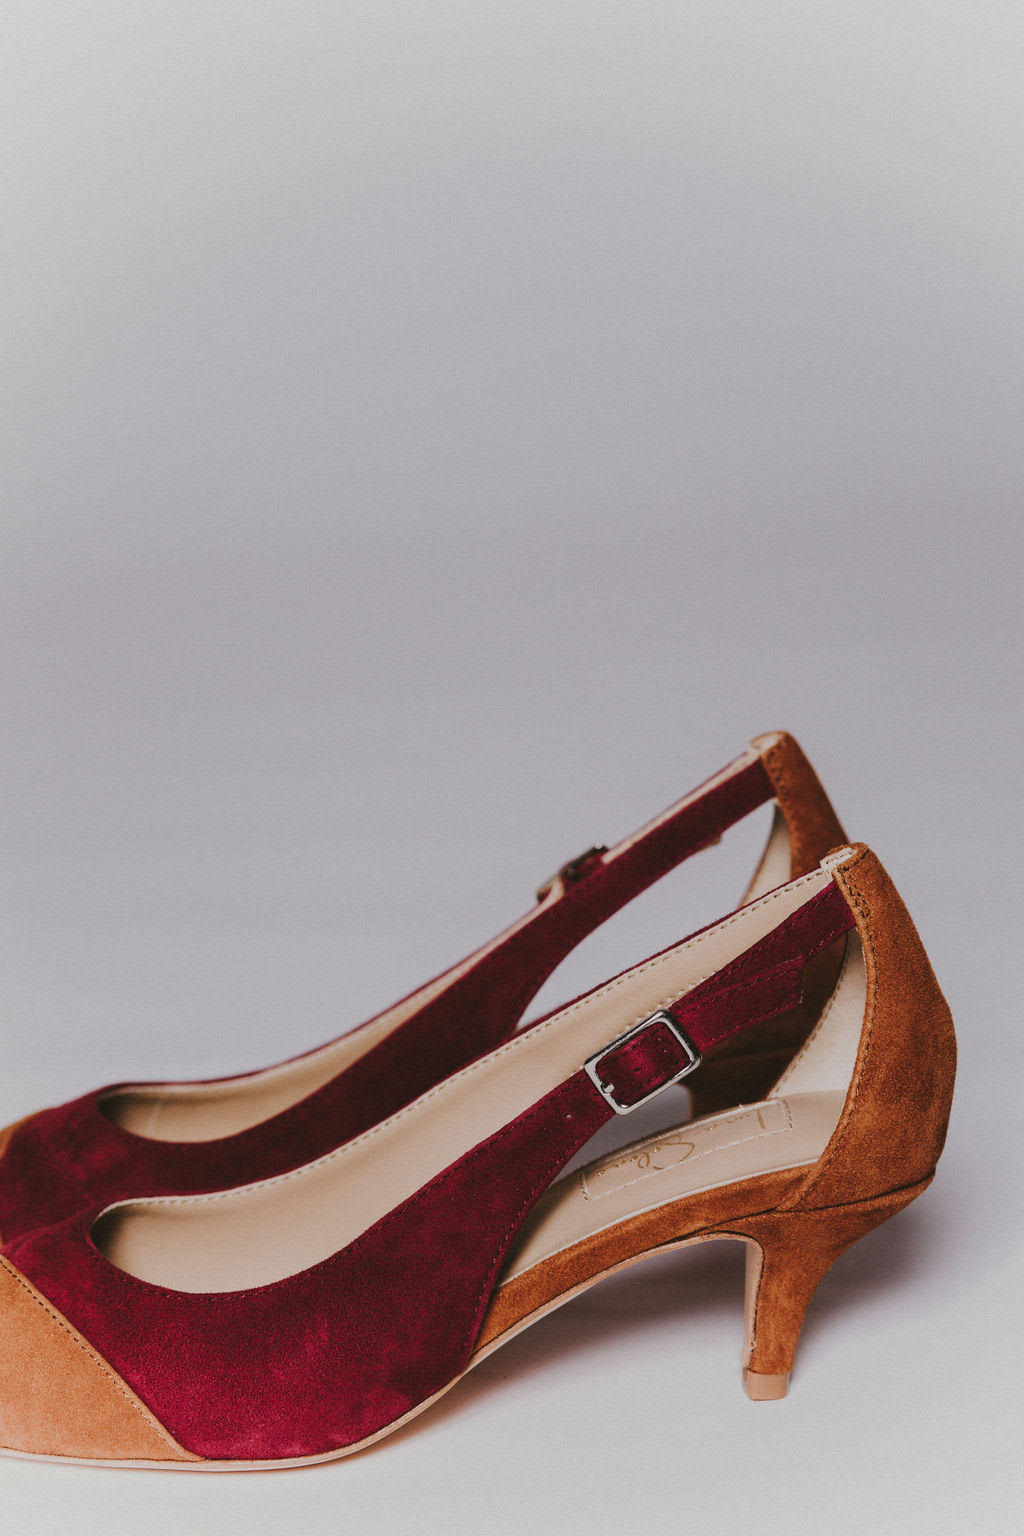 Brown and burgundy suede leather kitten heel.